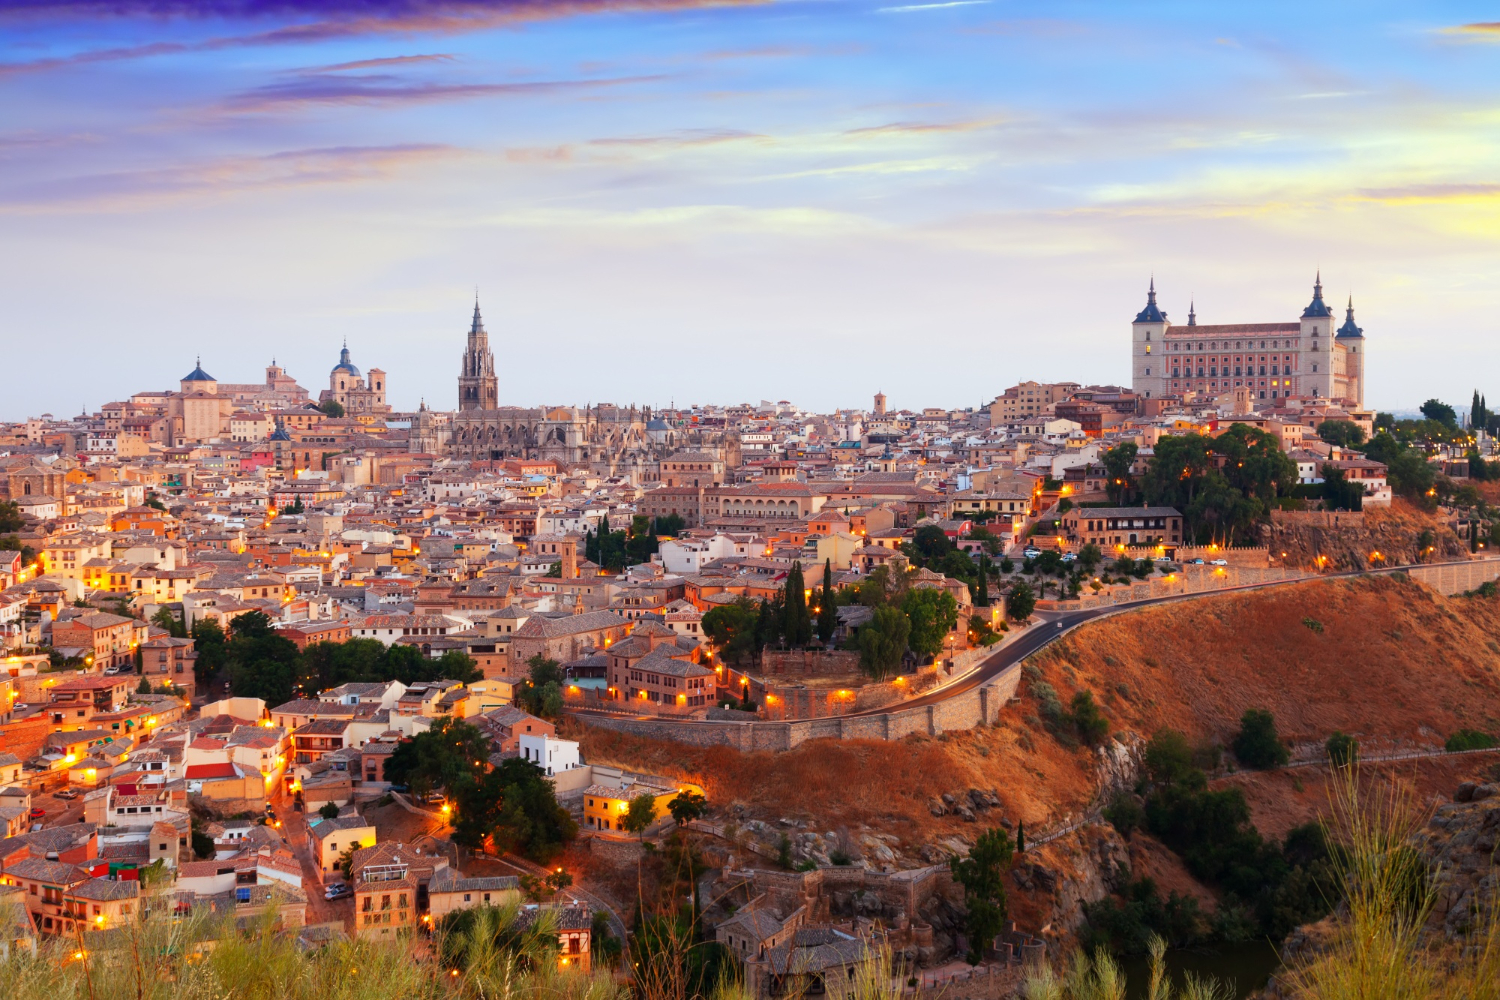 Toledo - A top destination in Spain